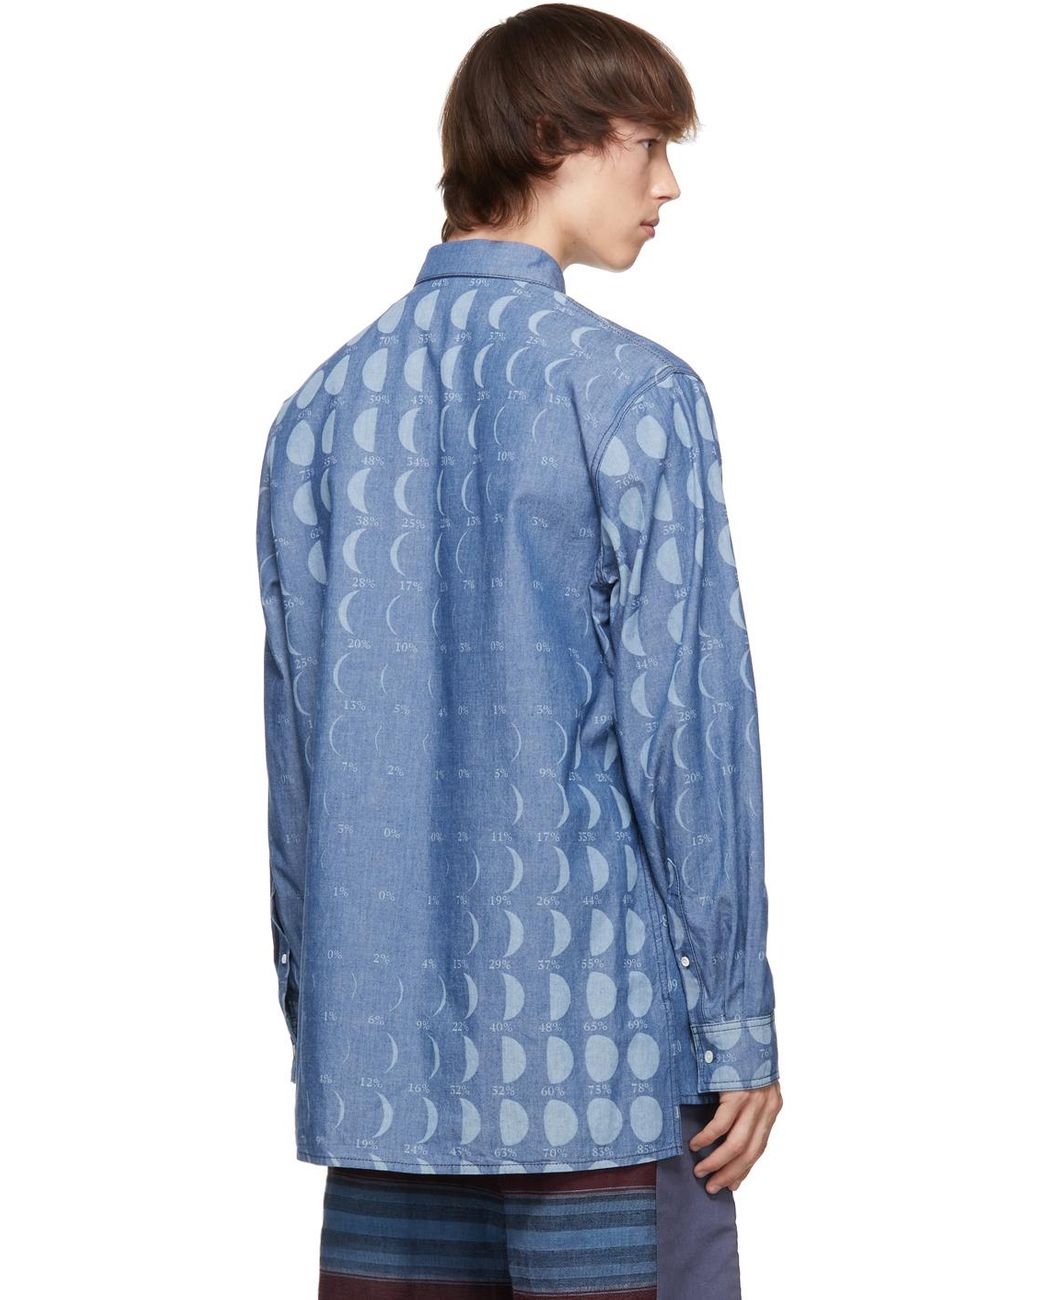 bekræfte Memo udledning Loewe Cotton Paula's Ibiza Chambray Moon Calendar Shirt in Blue for Men -  Lyst